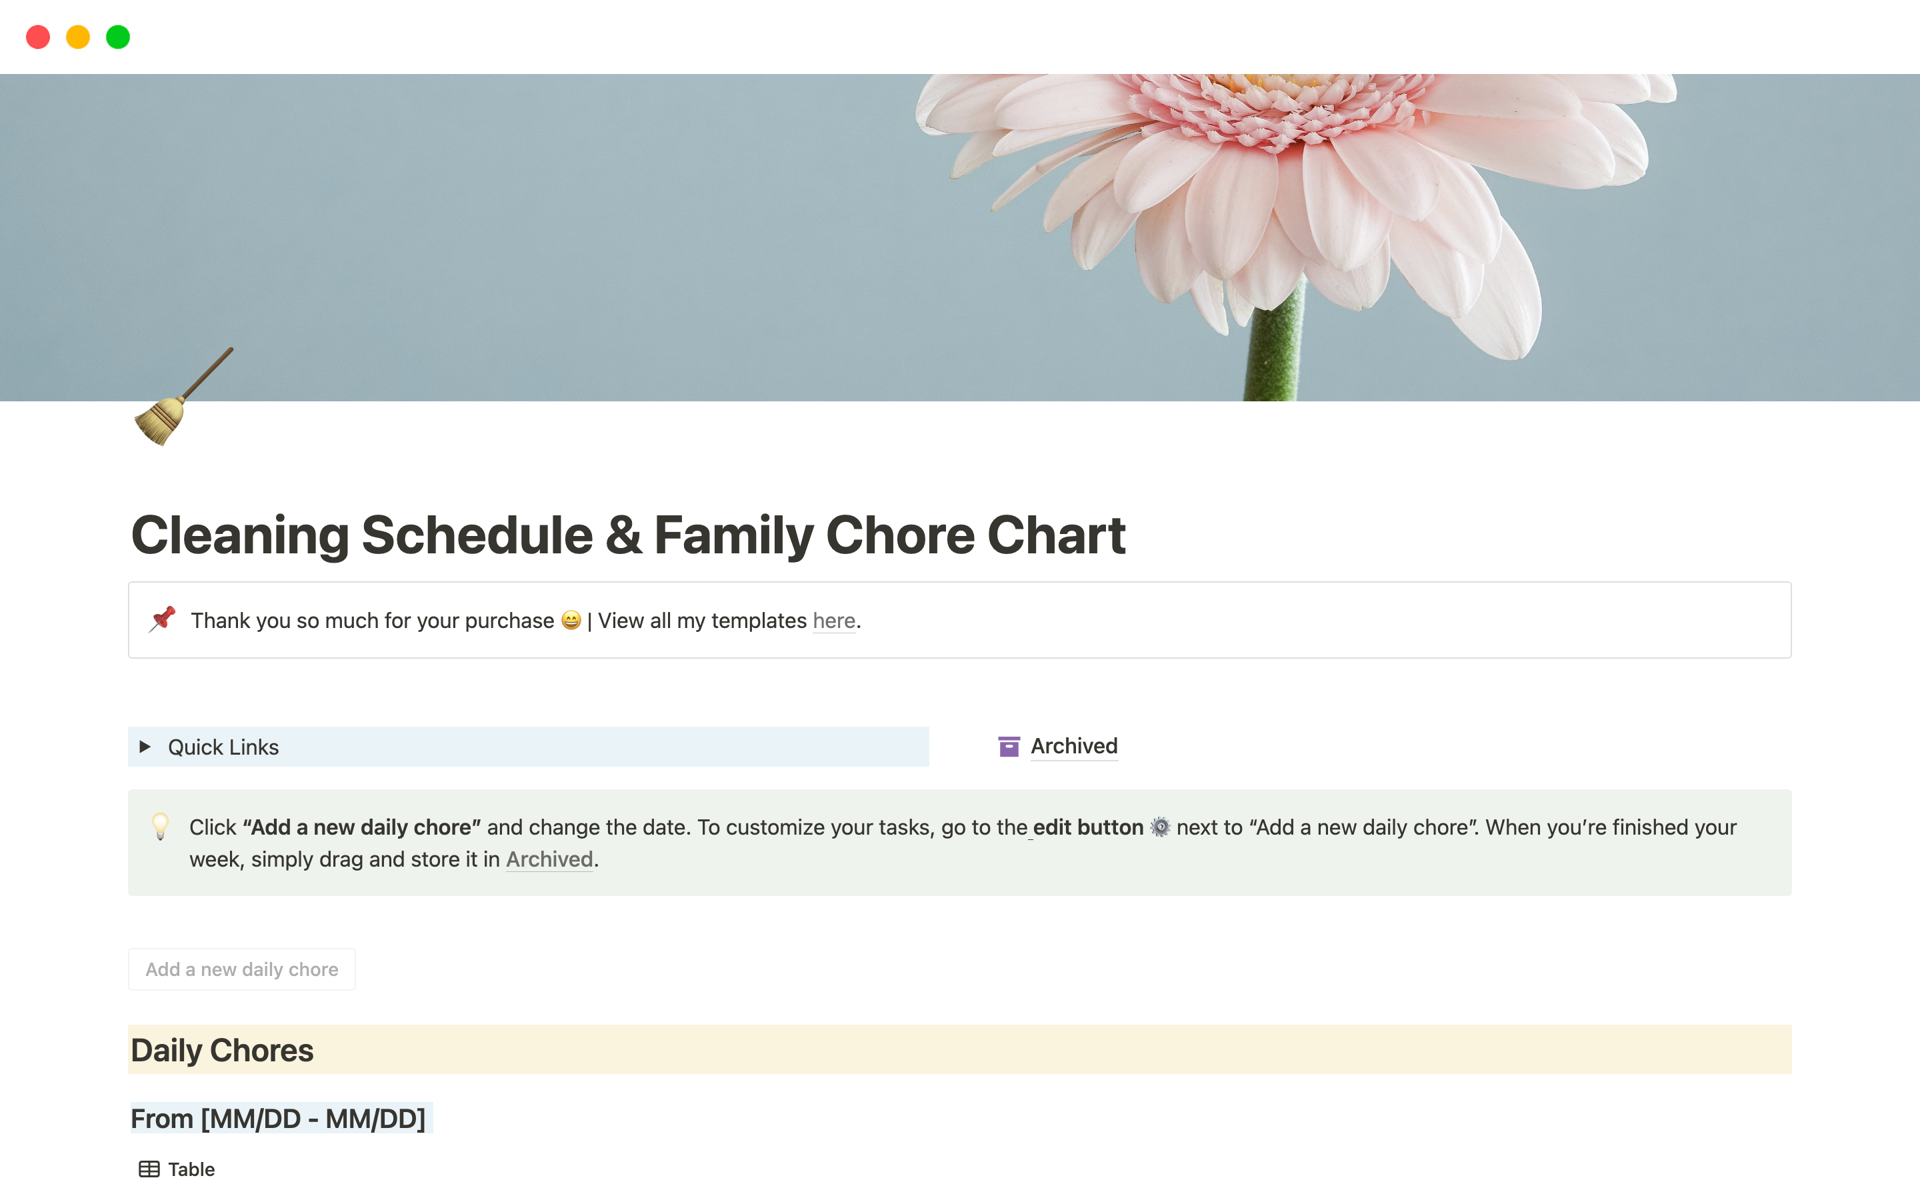 Cleaning Schedule & Family Chore Chart님의 템플릿 미리보기